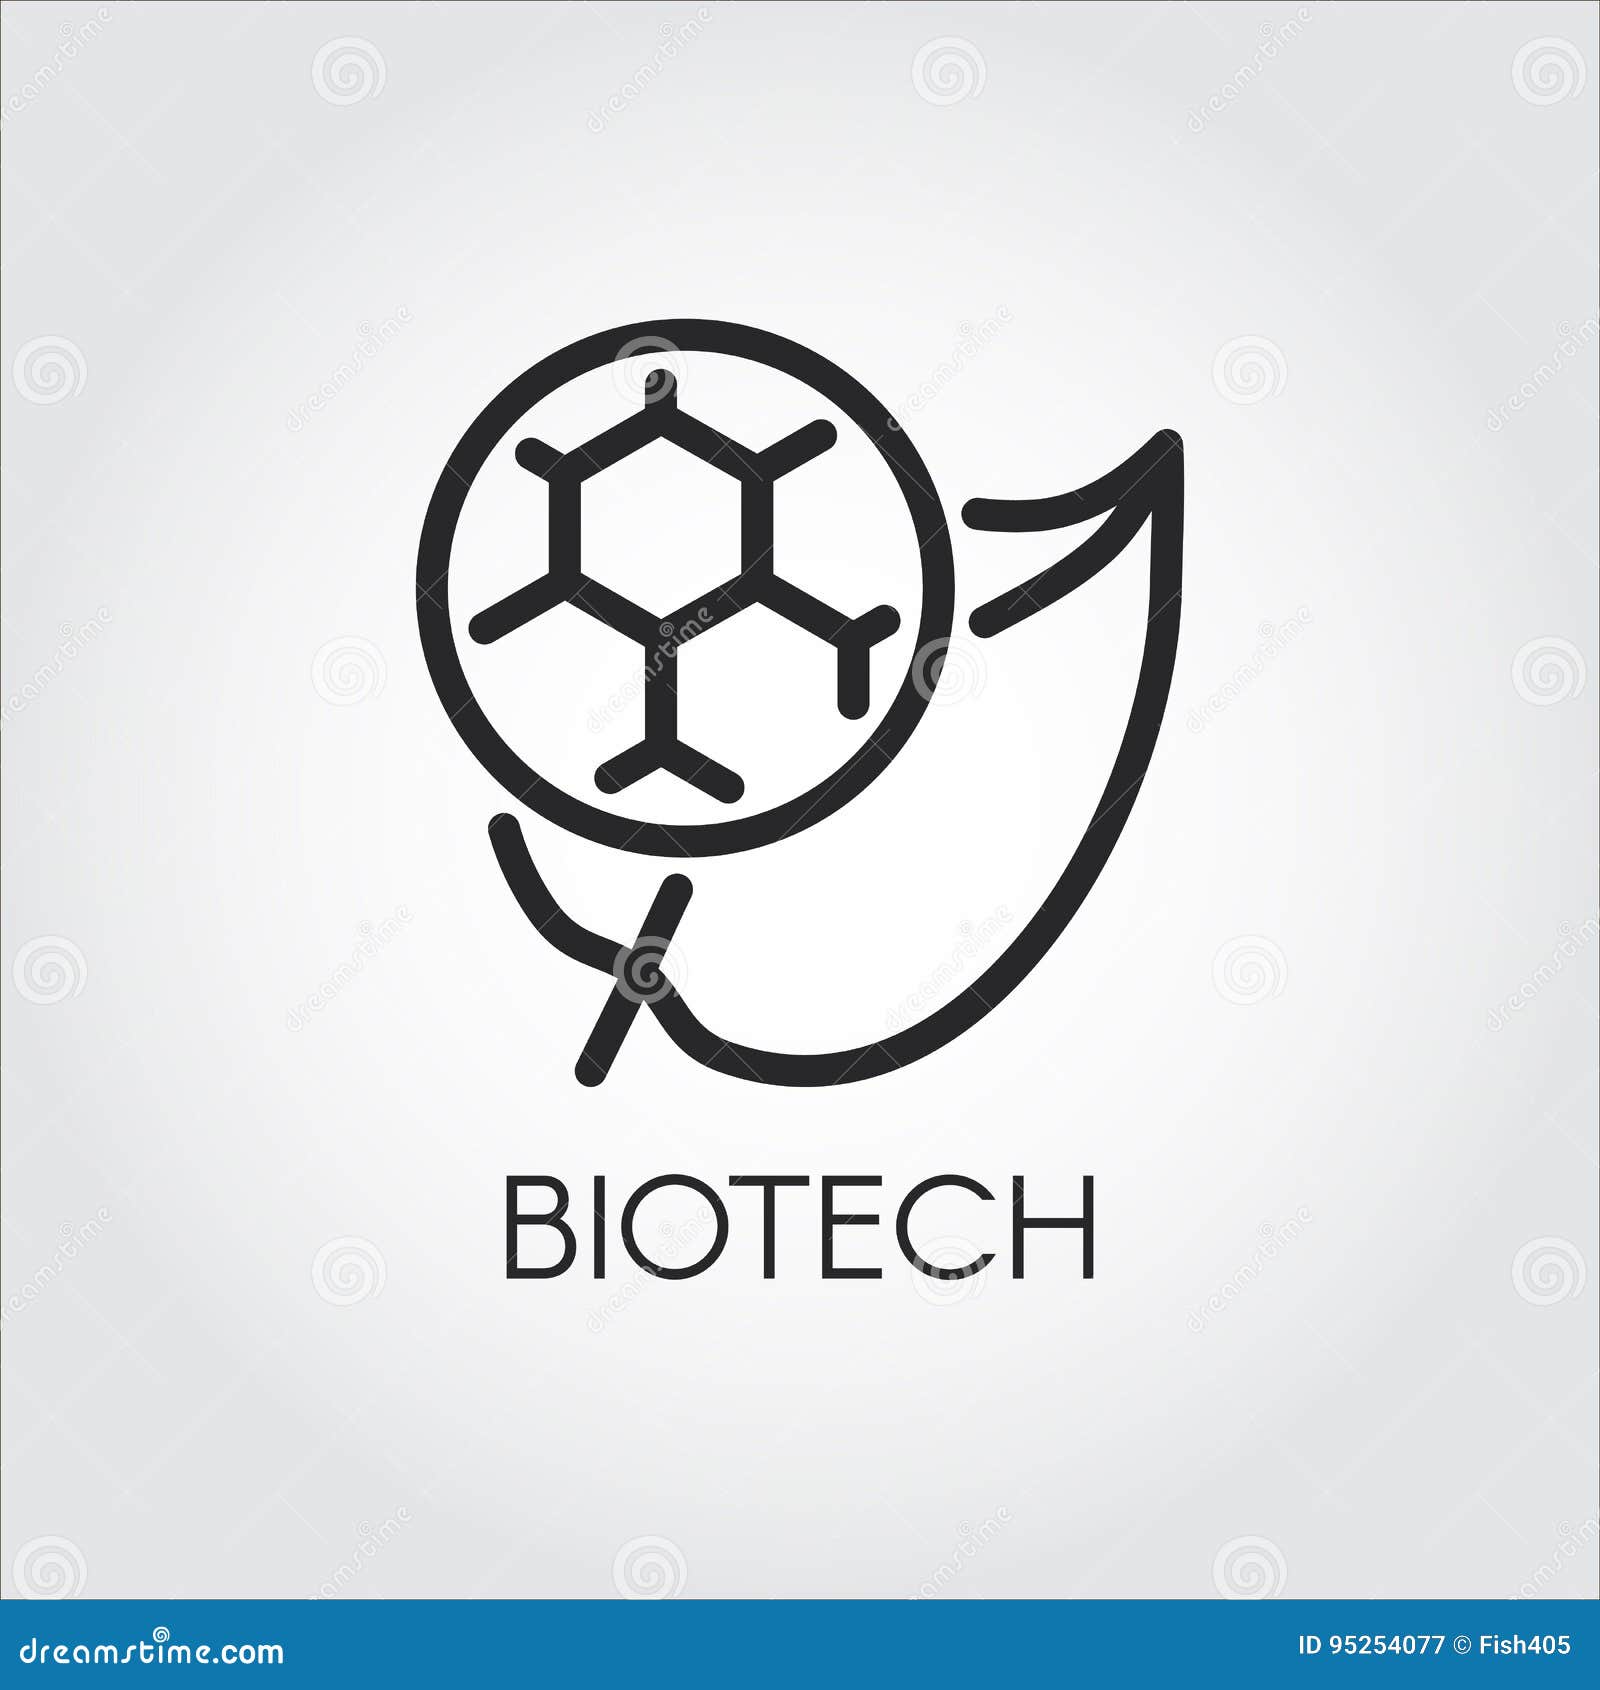 line icon of leaf and molecule izing biotech. simplicity black emblem of biotechnology concept.  logo